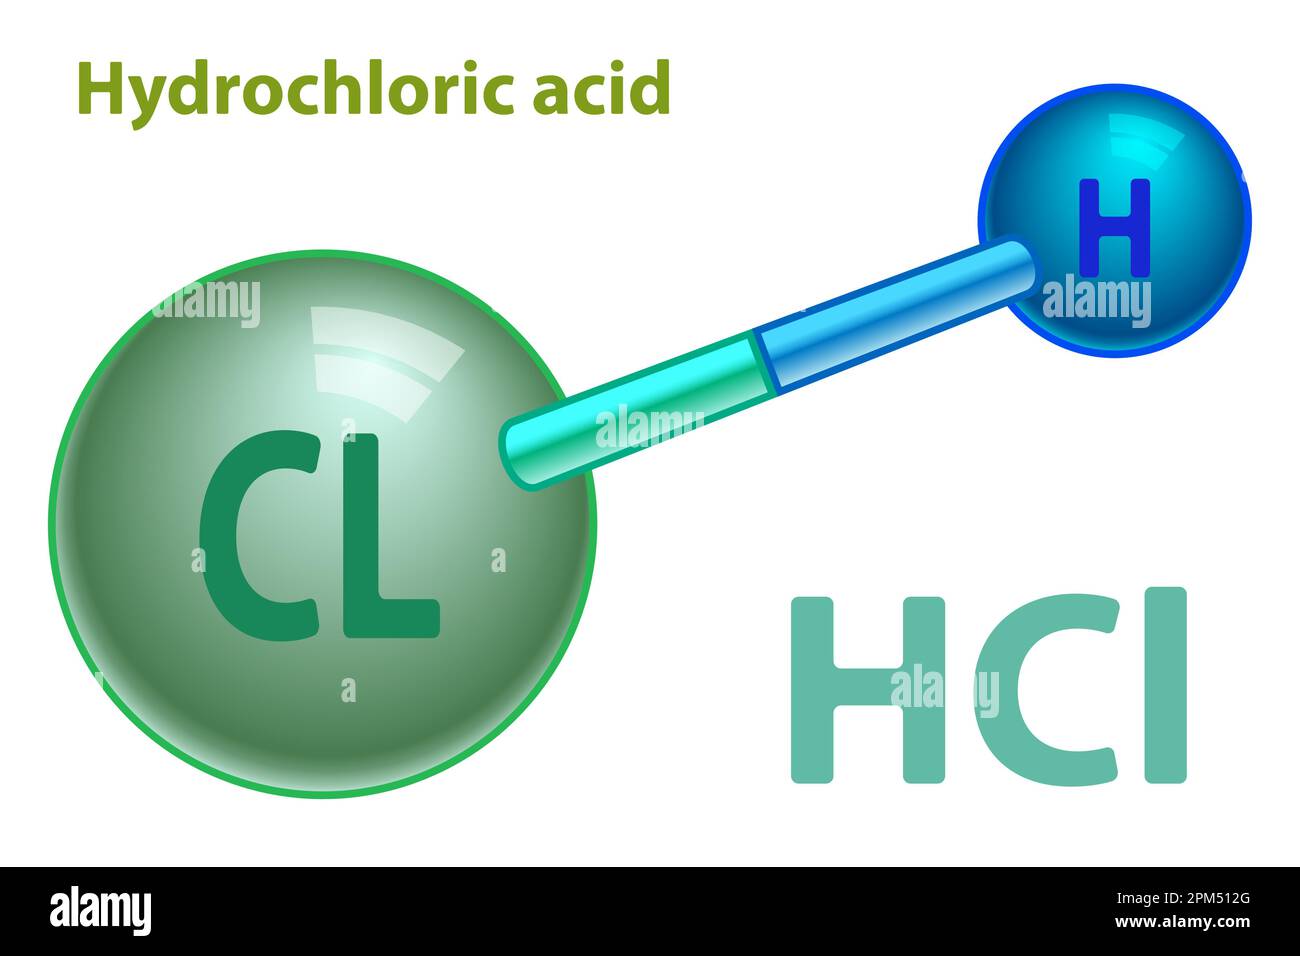 Abstract hydrochloric acid molecule concept illustration Stock Vector ...